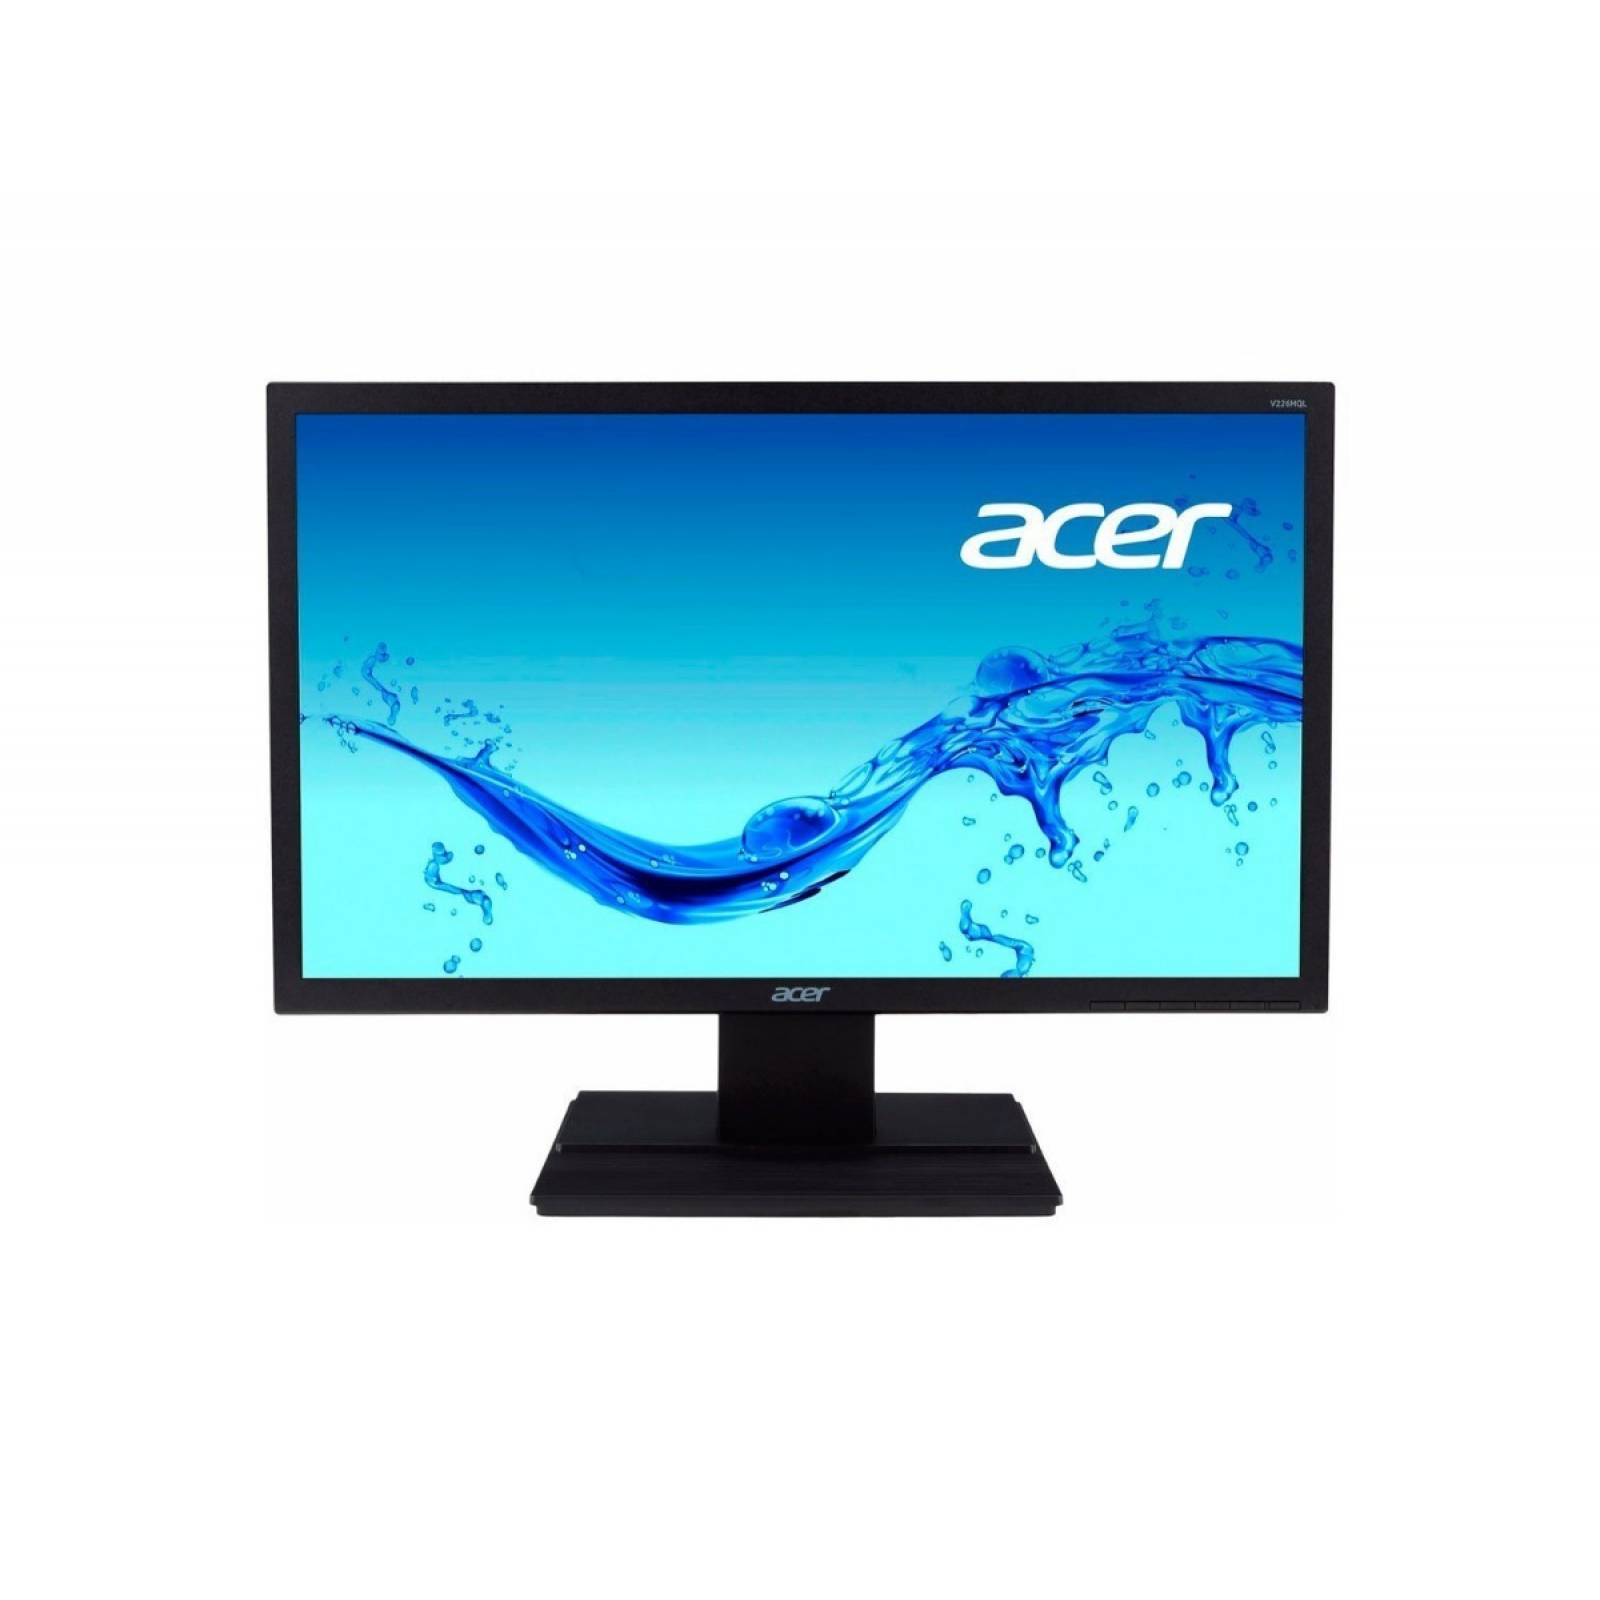 Monitor Acer V206hql Bb 195 Led Vga Vesa Negro 3wty